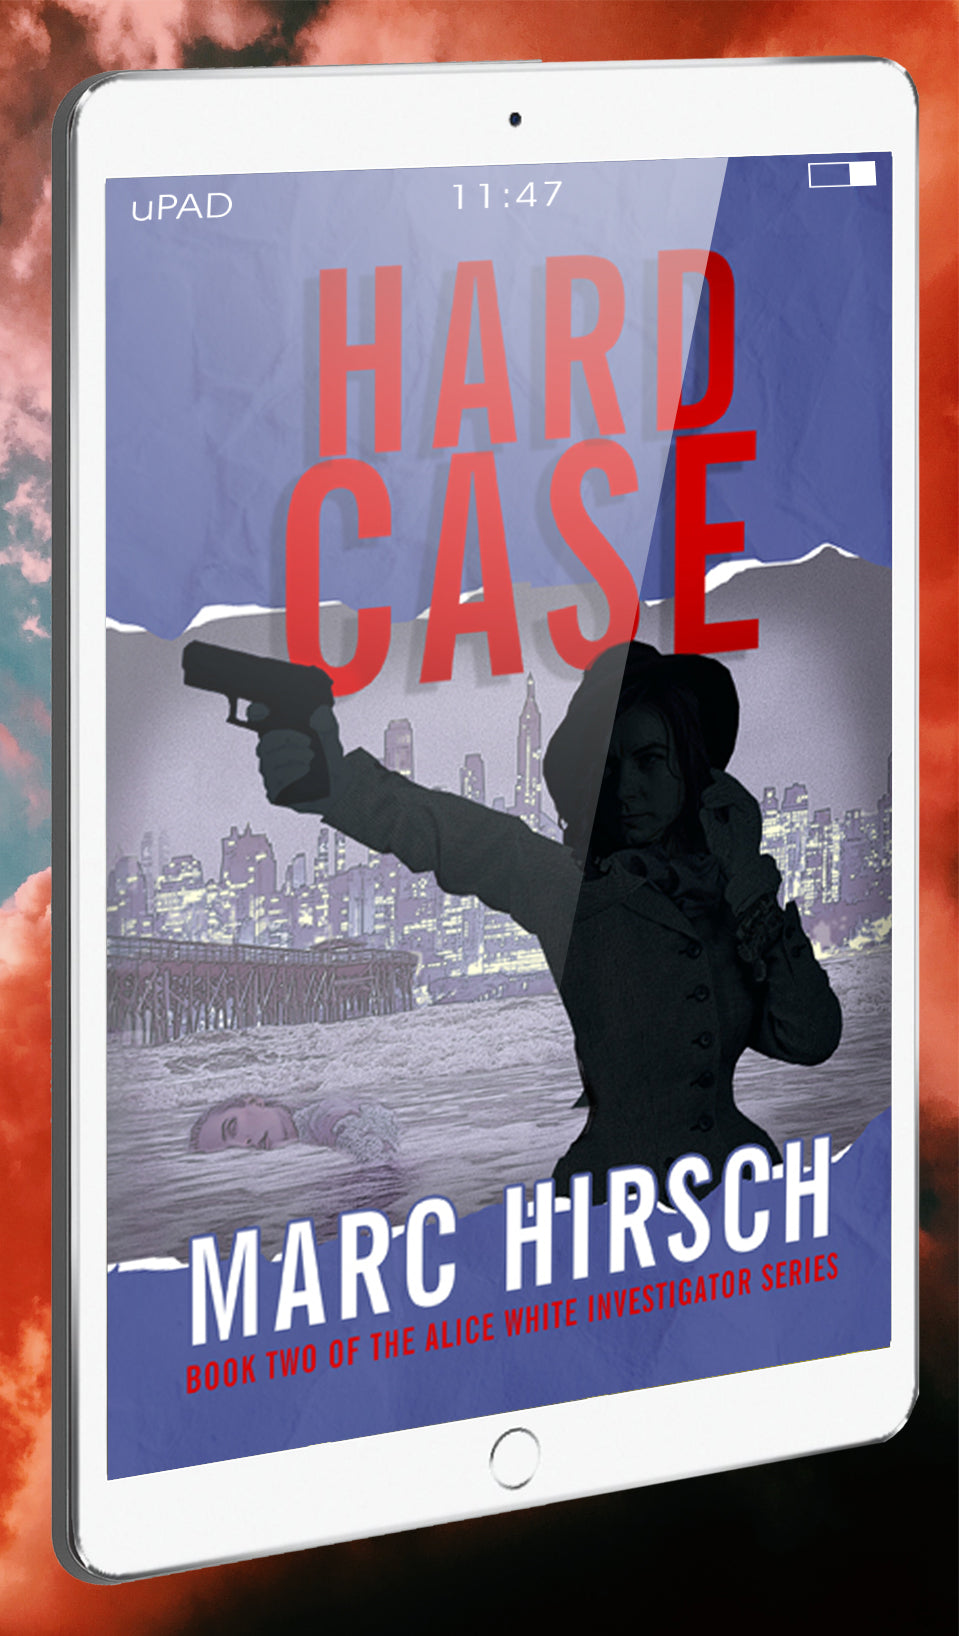 Hard Case eBook: Alice White Investigator Series Book 2